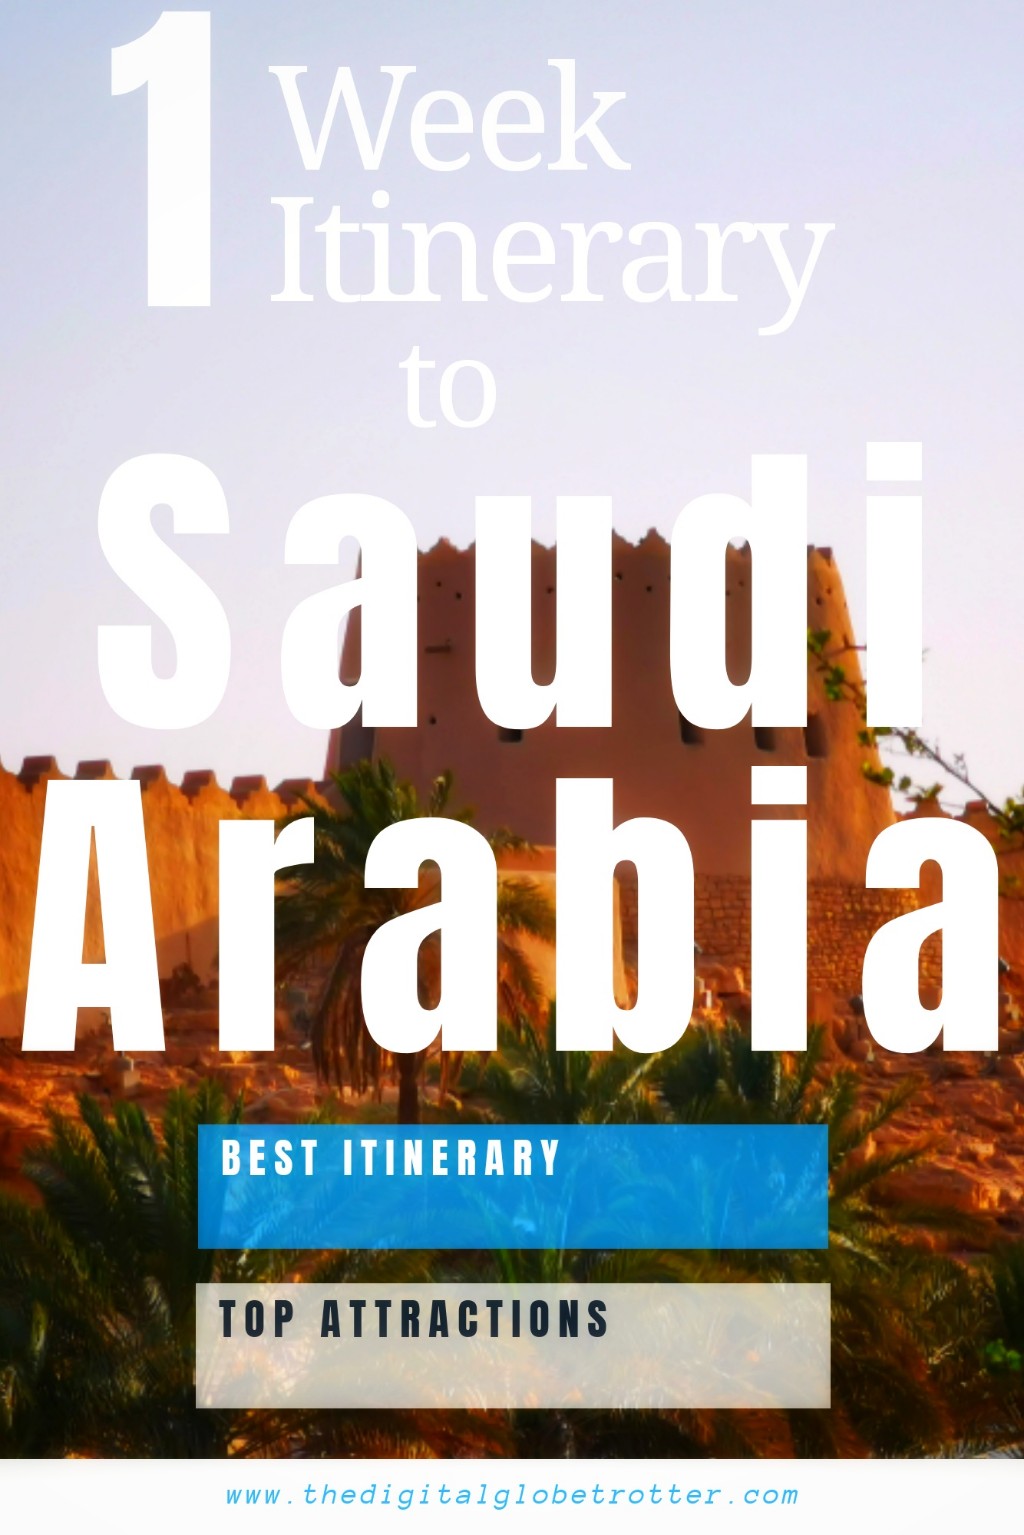 Great post - Exploring Saudi Arabia: 1 Week Traveling between Jeddah and Riyadh -- #saudiarabia #visitsaudiarabia #saudiarabiatrips #travelsaudiarabia #saudiarabiaflights #saudiarabiahotels #saudiarabiahostels #saudiarabiaairbnb #saudiarabiatips #saudiarabiamaps #saudiarabiaguide #saudiarabiatours #saudiarabiabooking #saudiarabiainfo